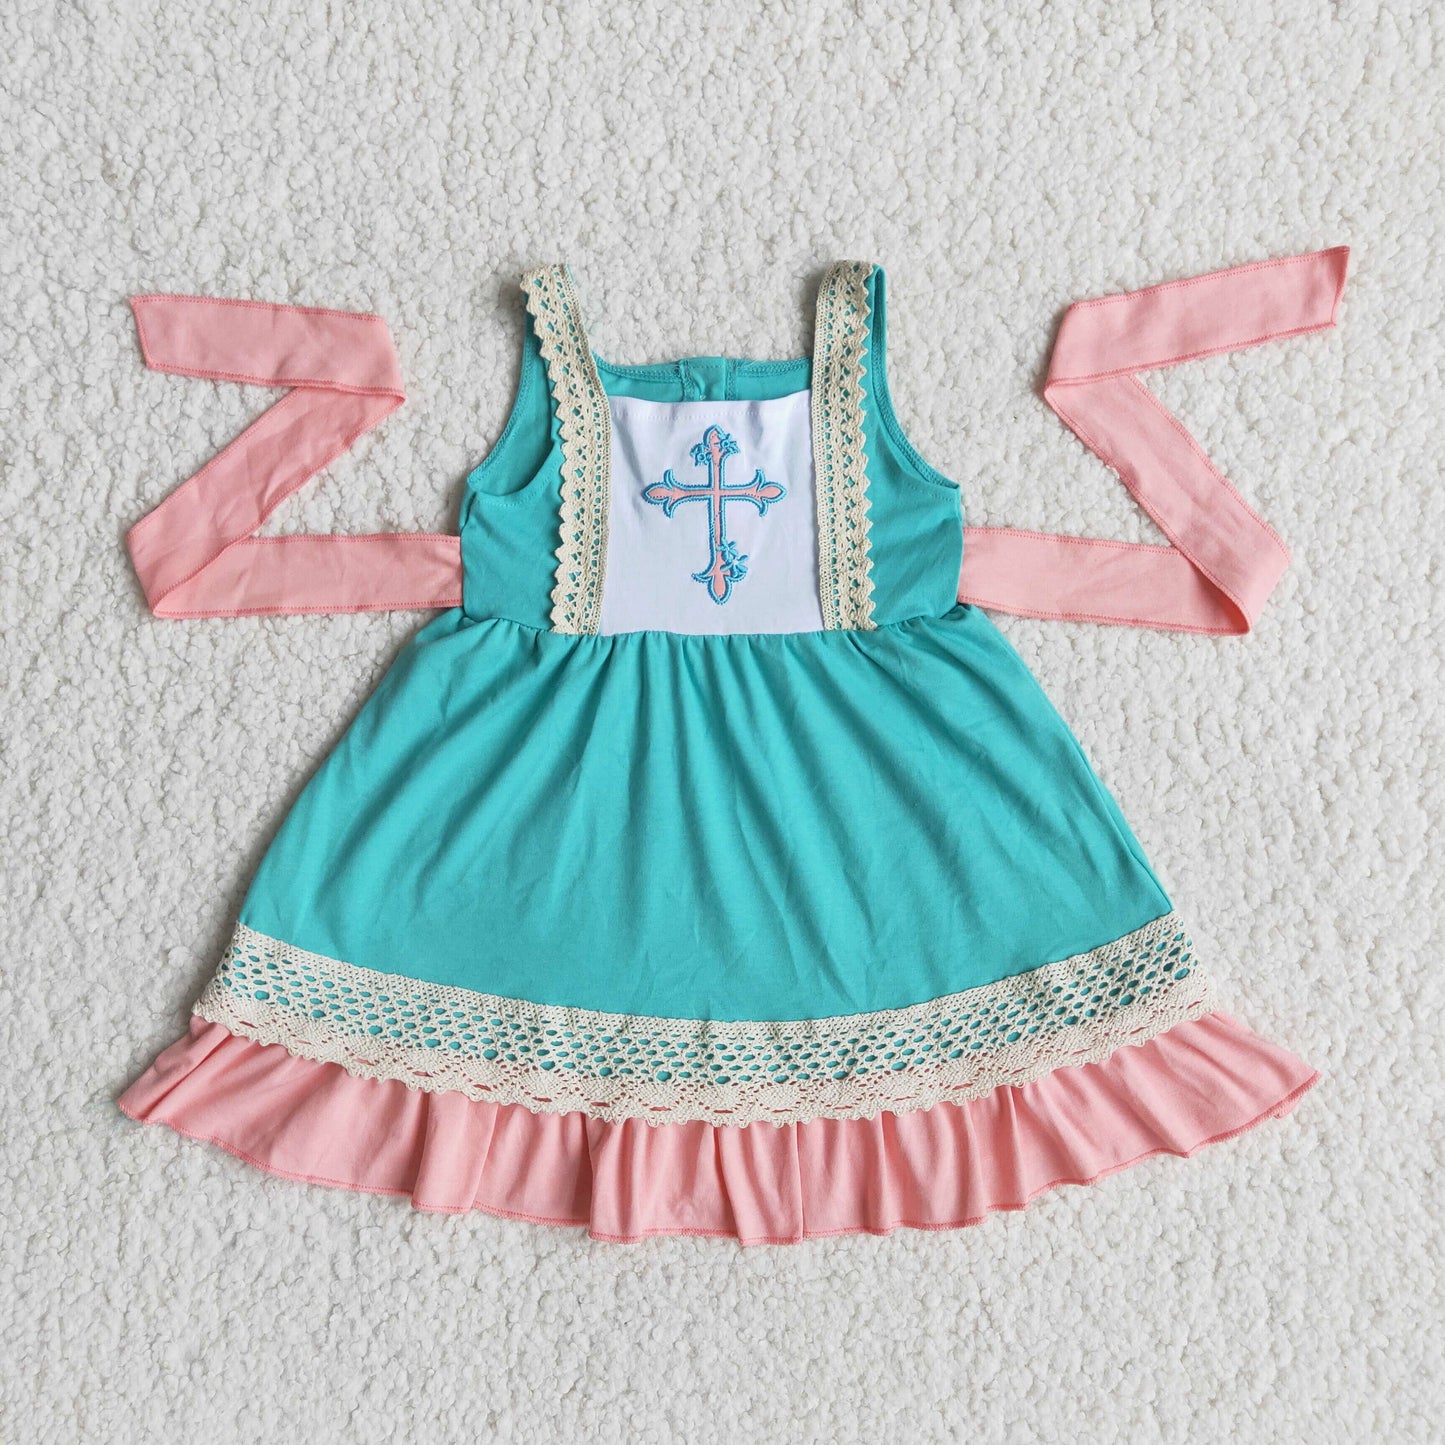 girl’s cross embroidery dress for easter